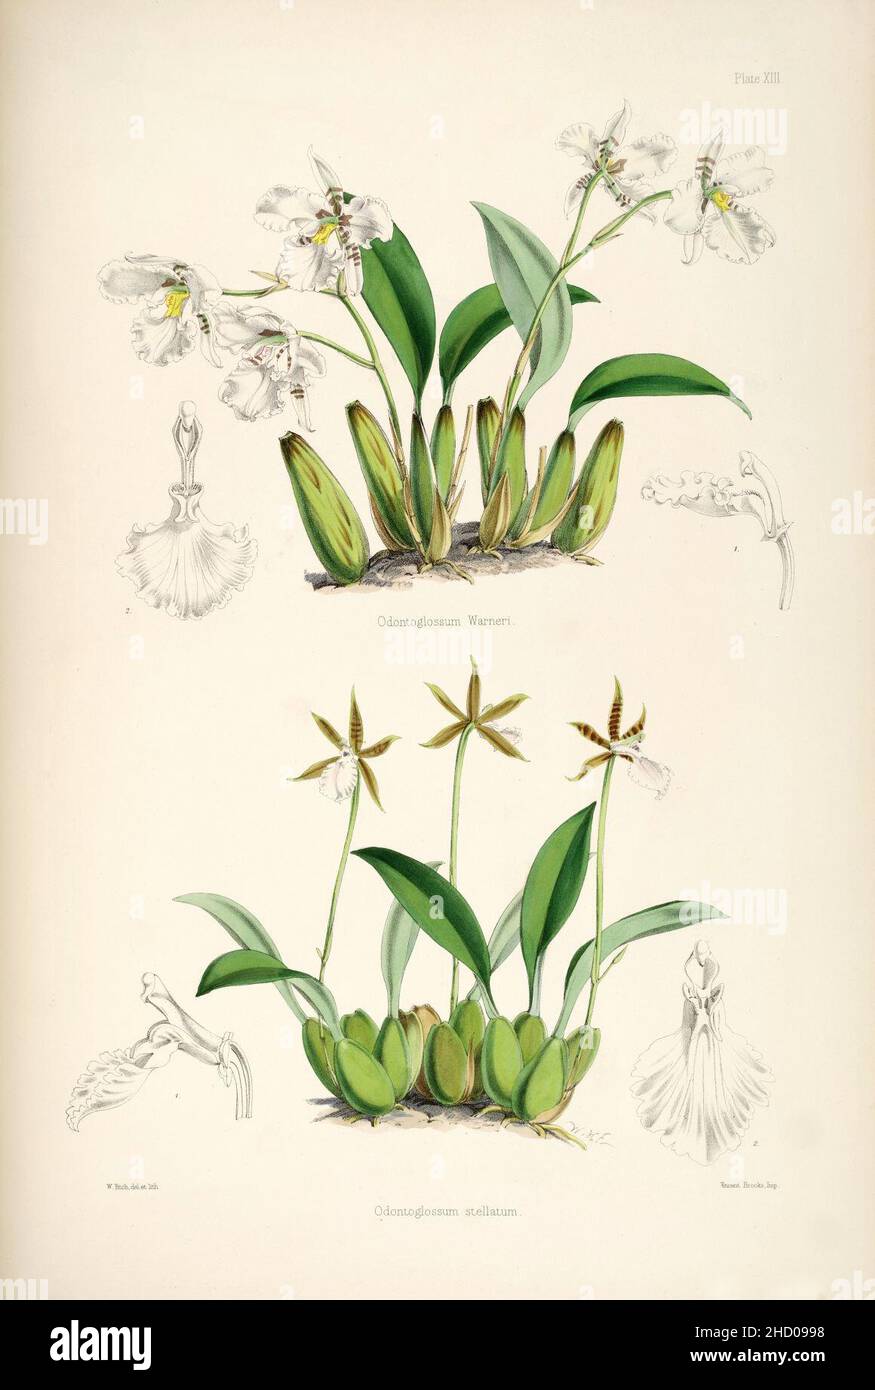 Rhynchostele rossii (as Odontoglossum warnerianum) and Rhynchostele stellata (as Odontoglossum stellatum) - pl. 13 - Bateman, Monogr.Odont. Stock Photo